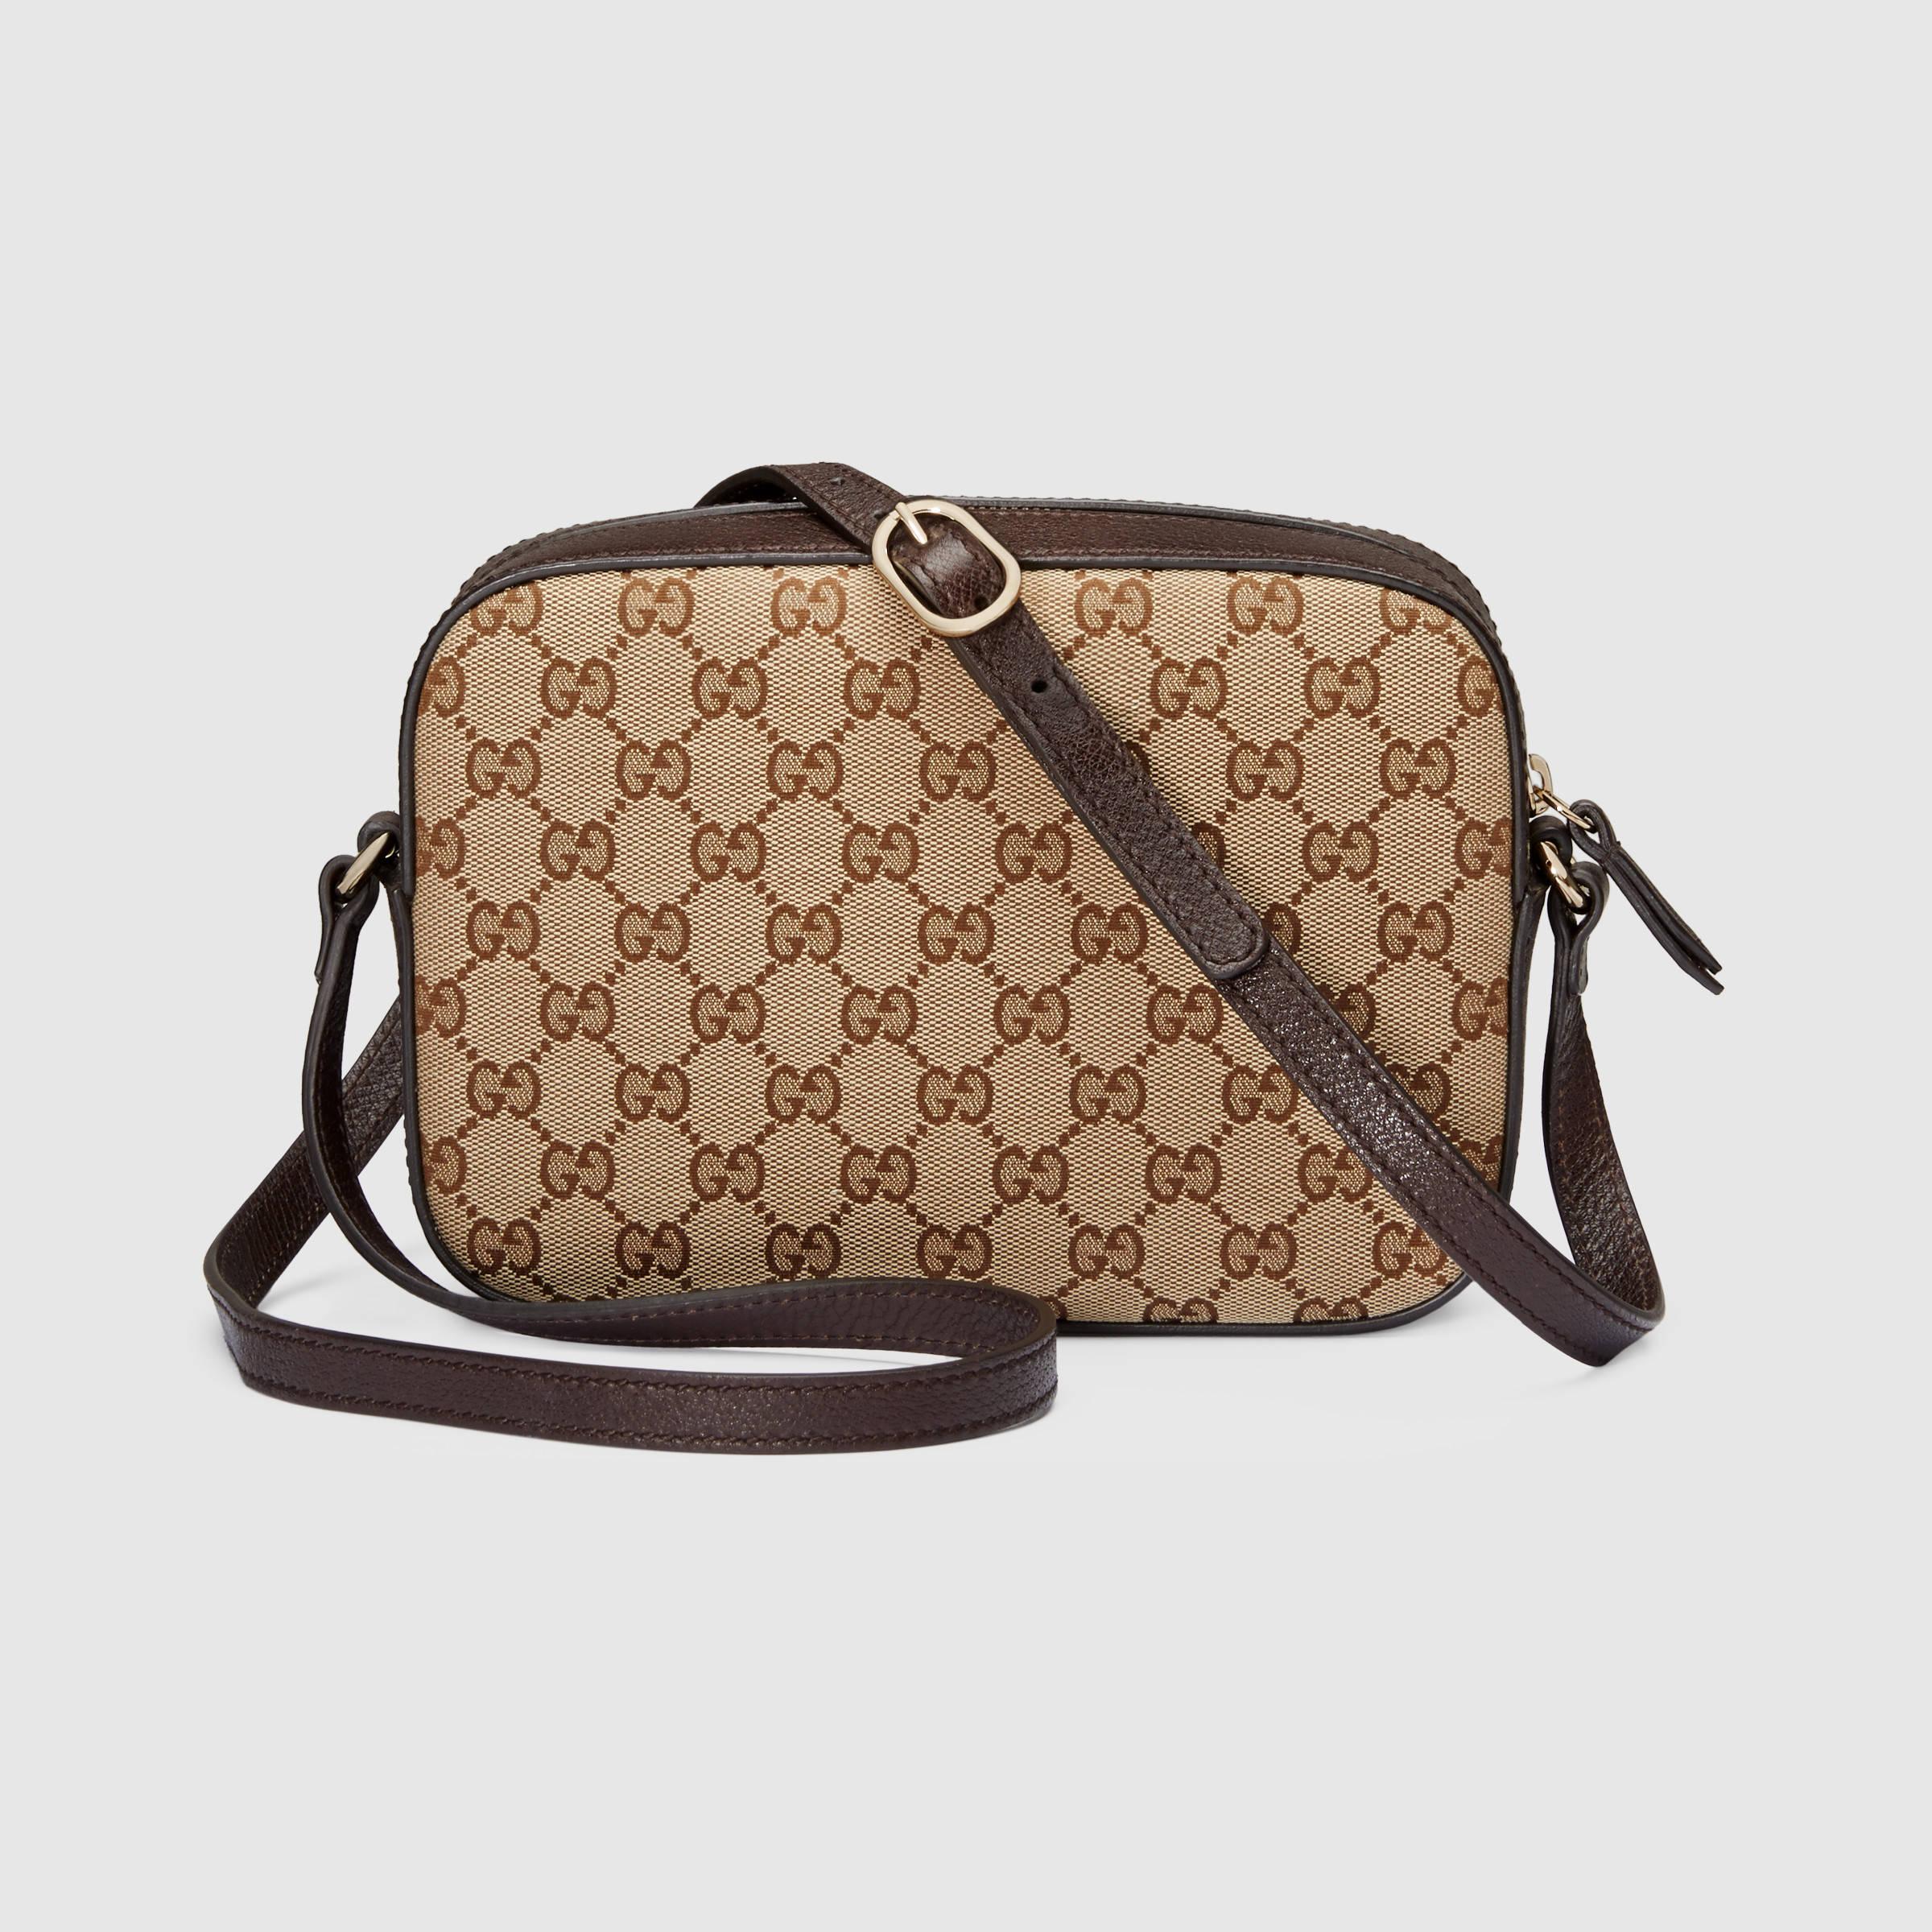 Lyst - Gucci Original GG Supreme Shoulder Bag in Brown